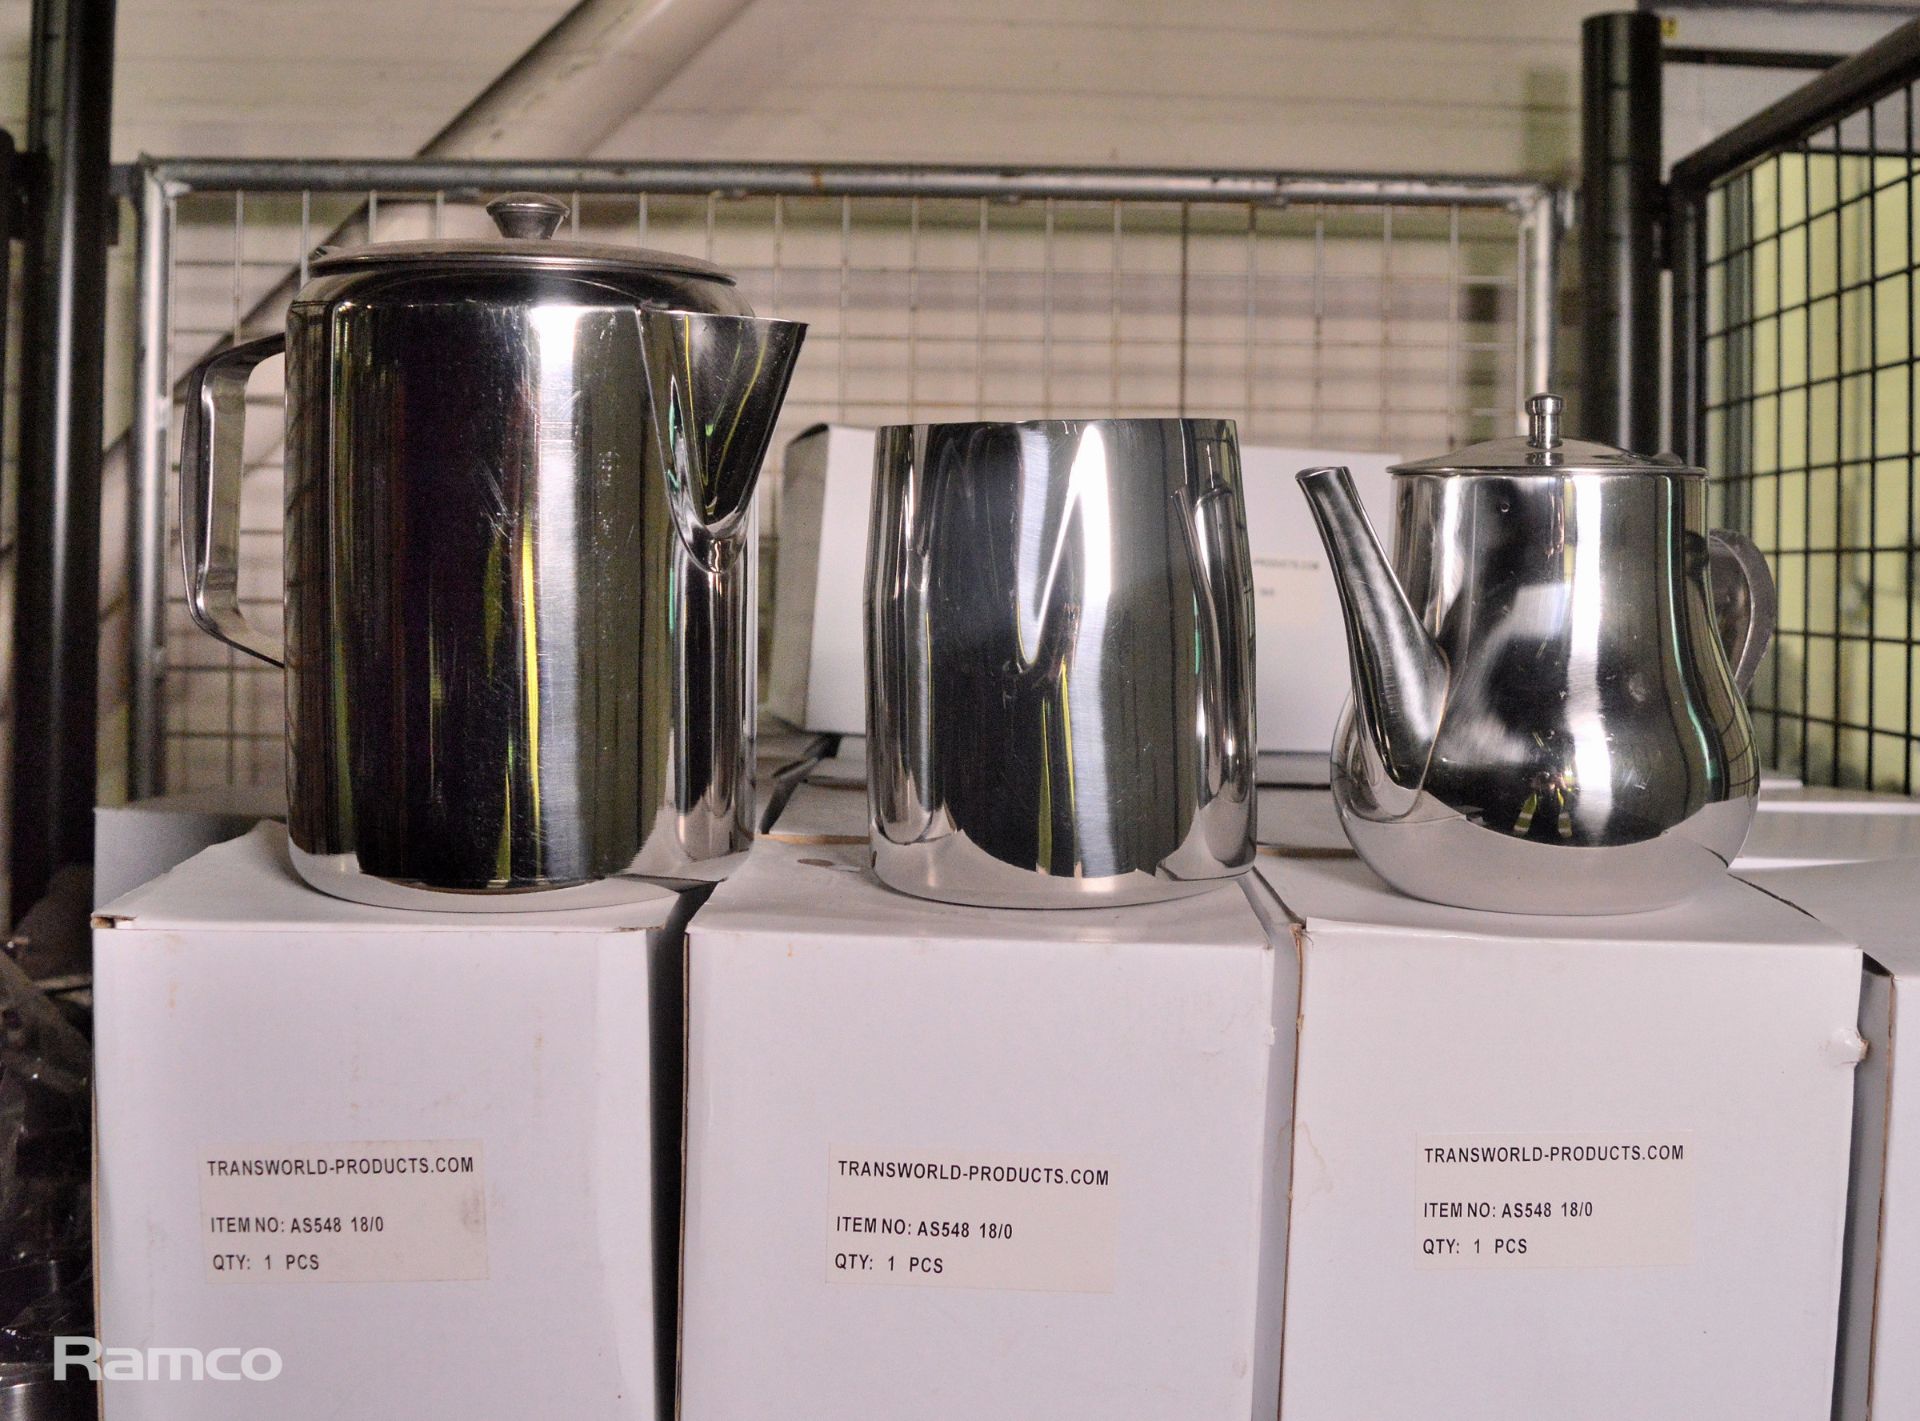 6x Stainless Steel Economy 100-Oz Tea Pots, 53x Stainless Steel Arabian Teapot 48 Oz, 12x - Image 2 of 3